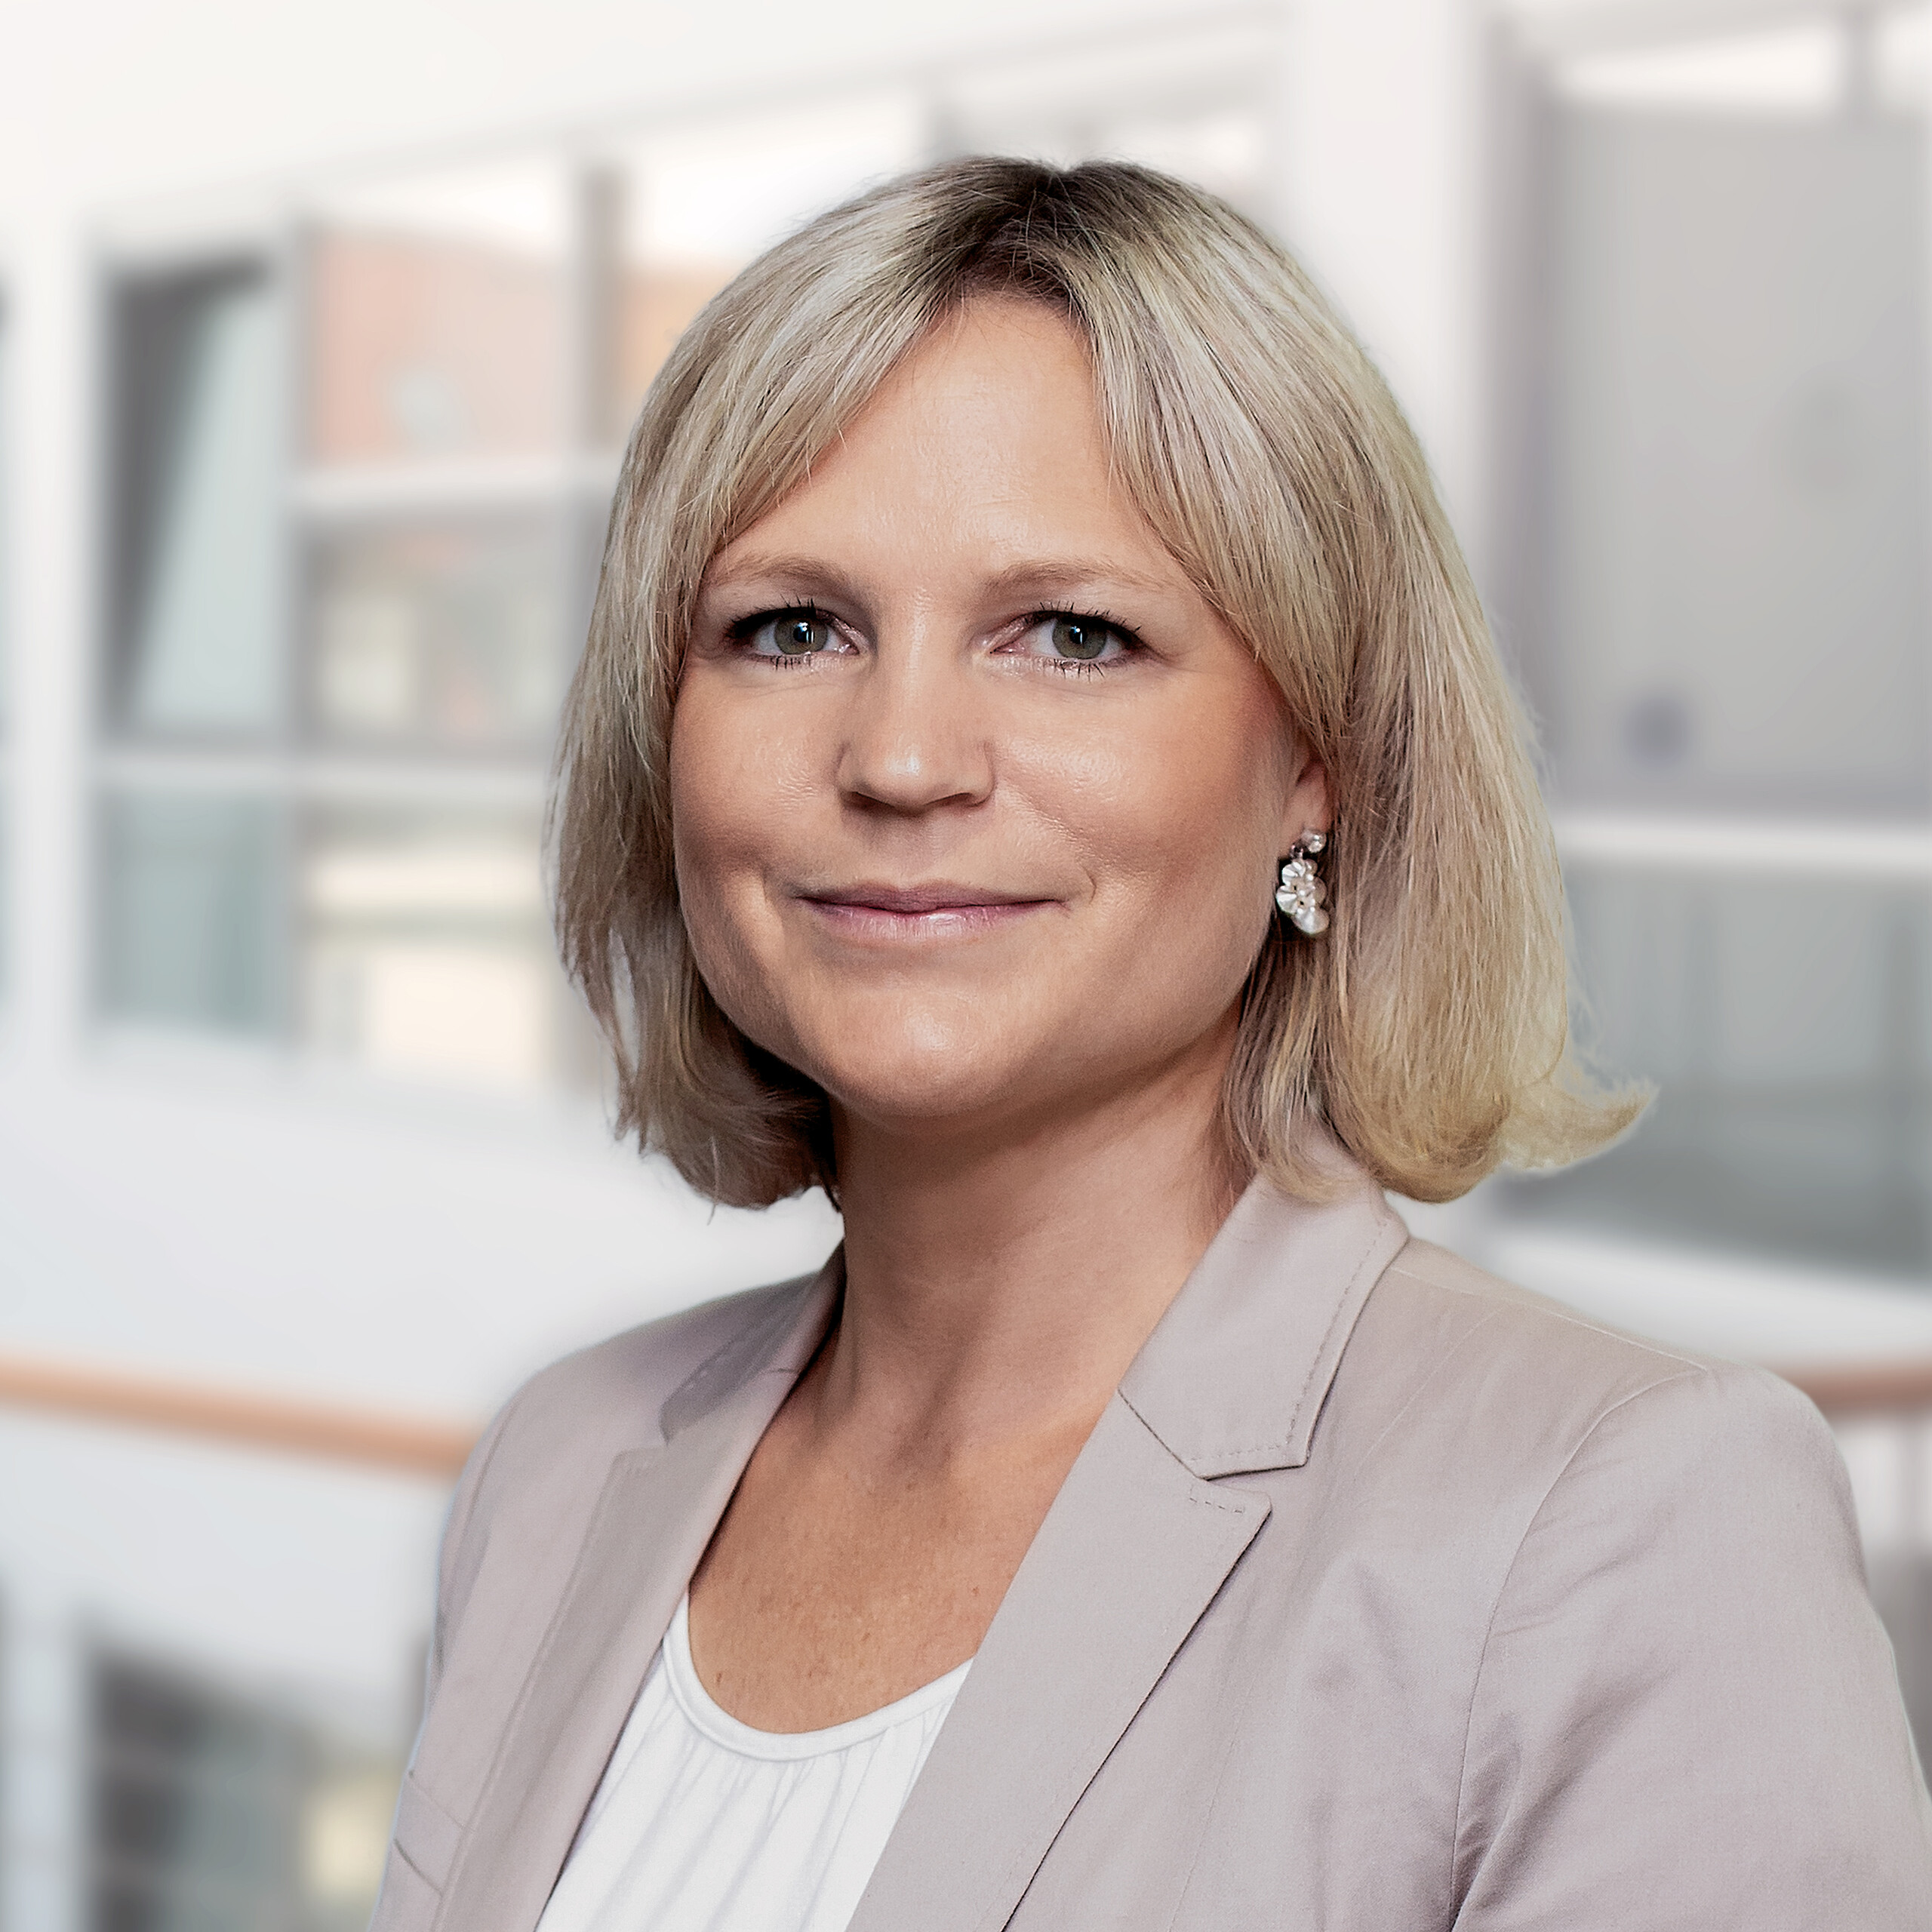 Annette Kroger, PDG, Europe du Nord et centrale, Allianz Real Estate